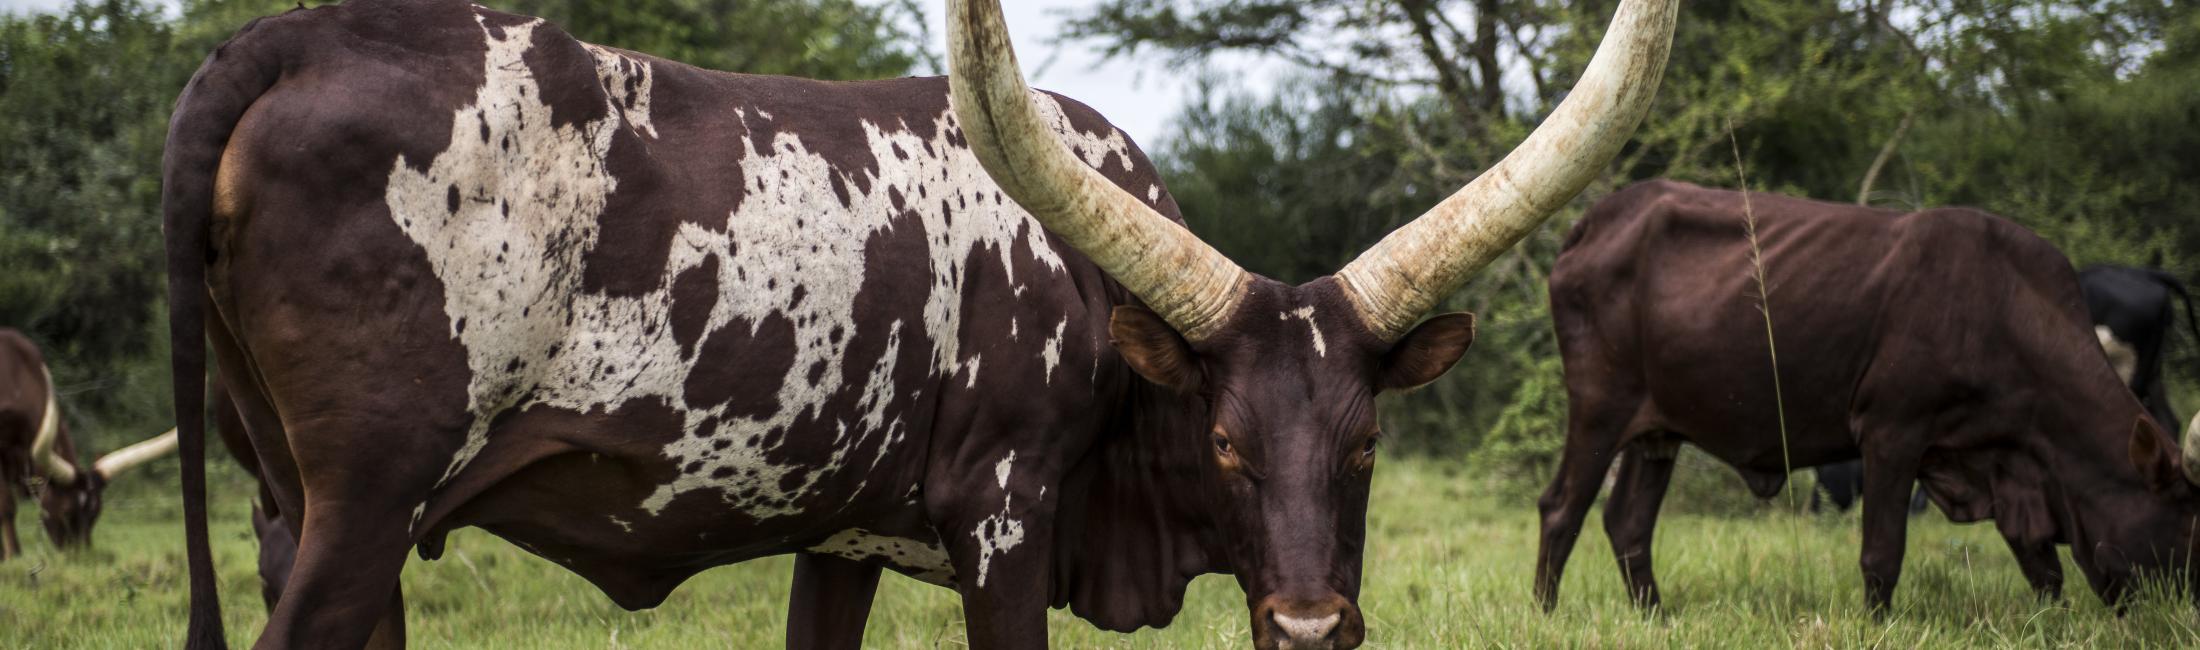 Ankole Cattle with long horns (Uganda)